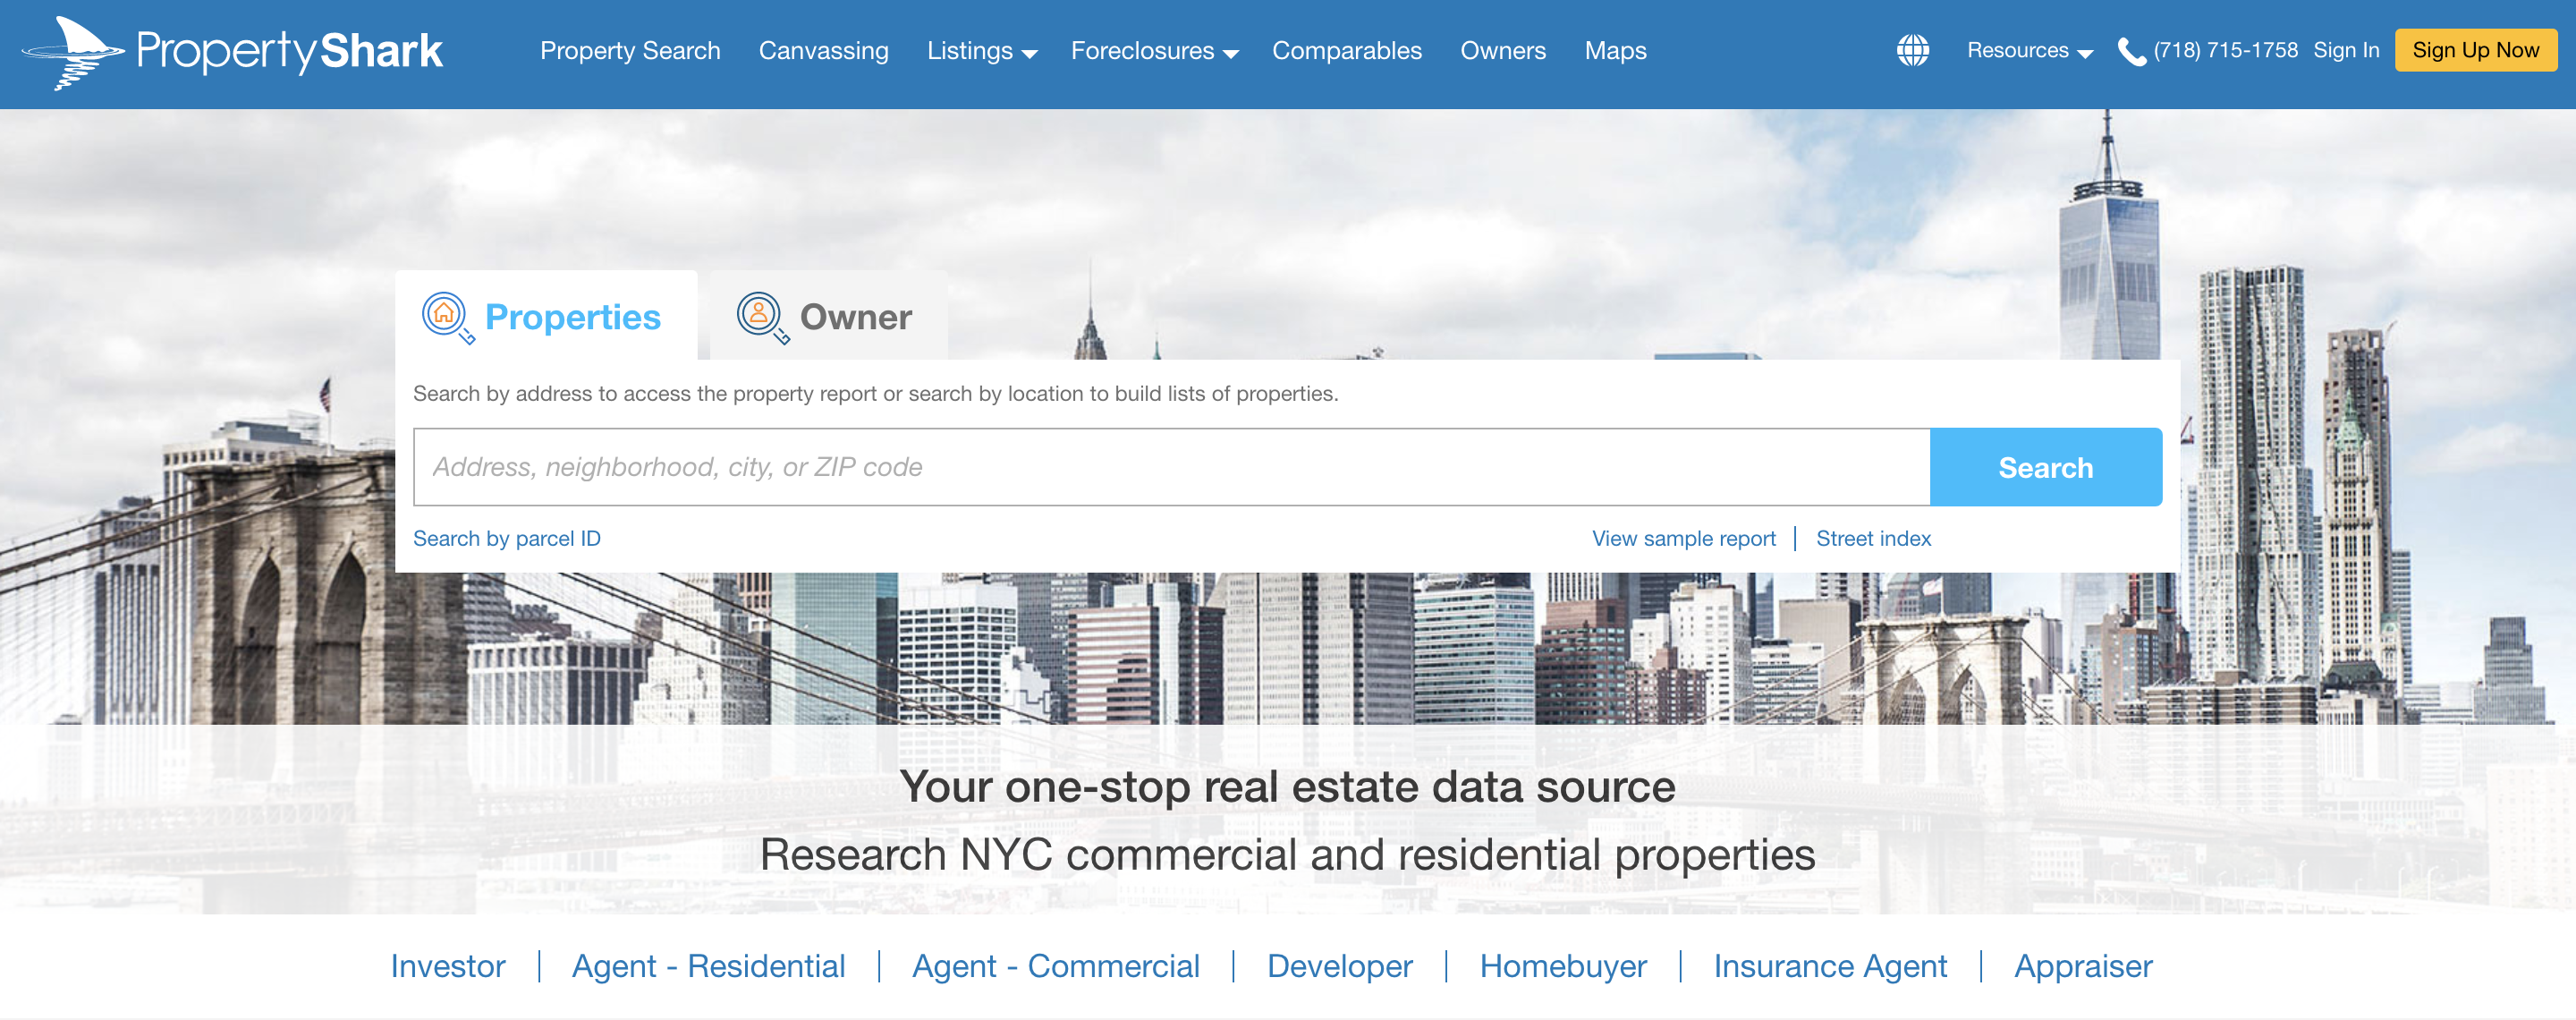 CRE data providers | PropertyShark